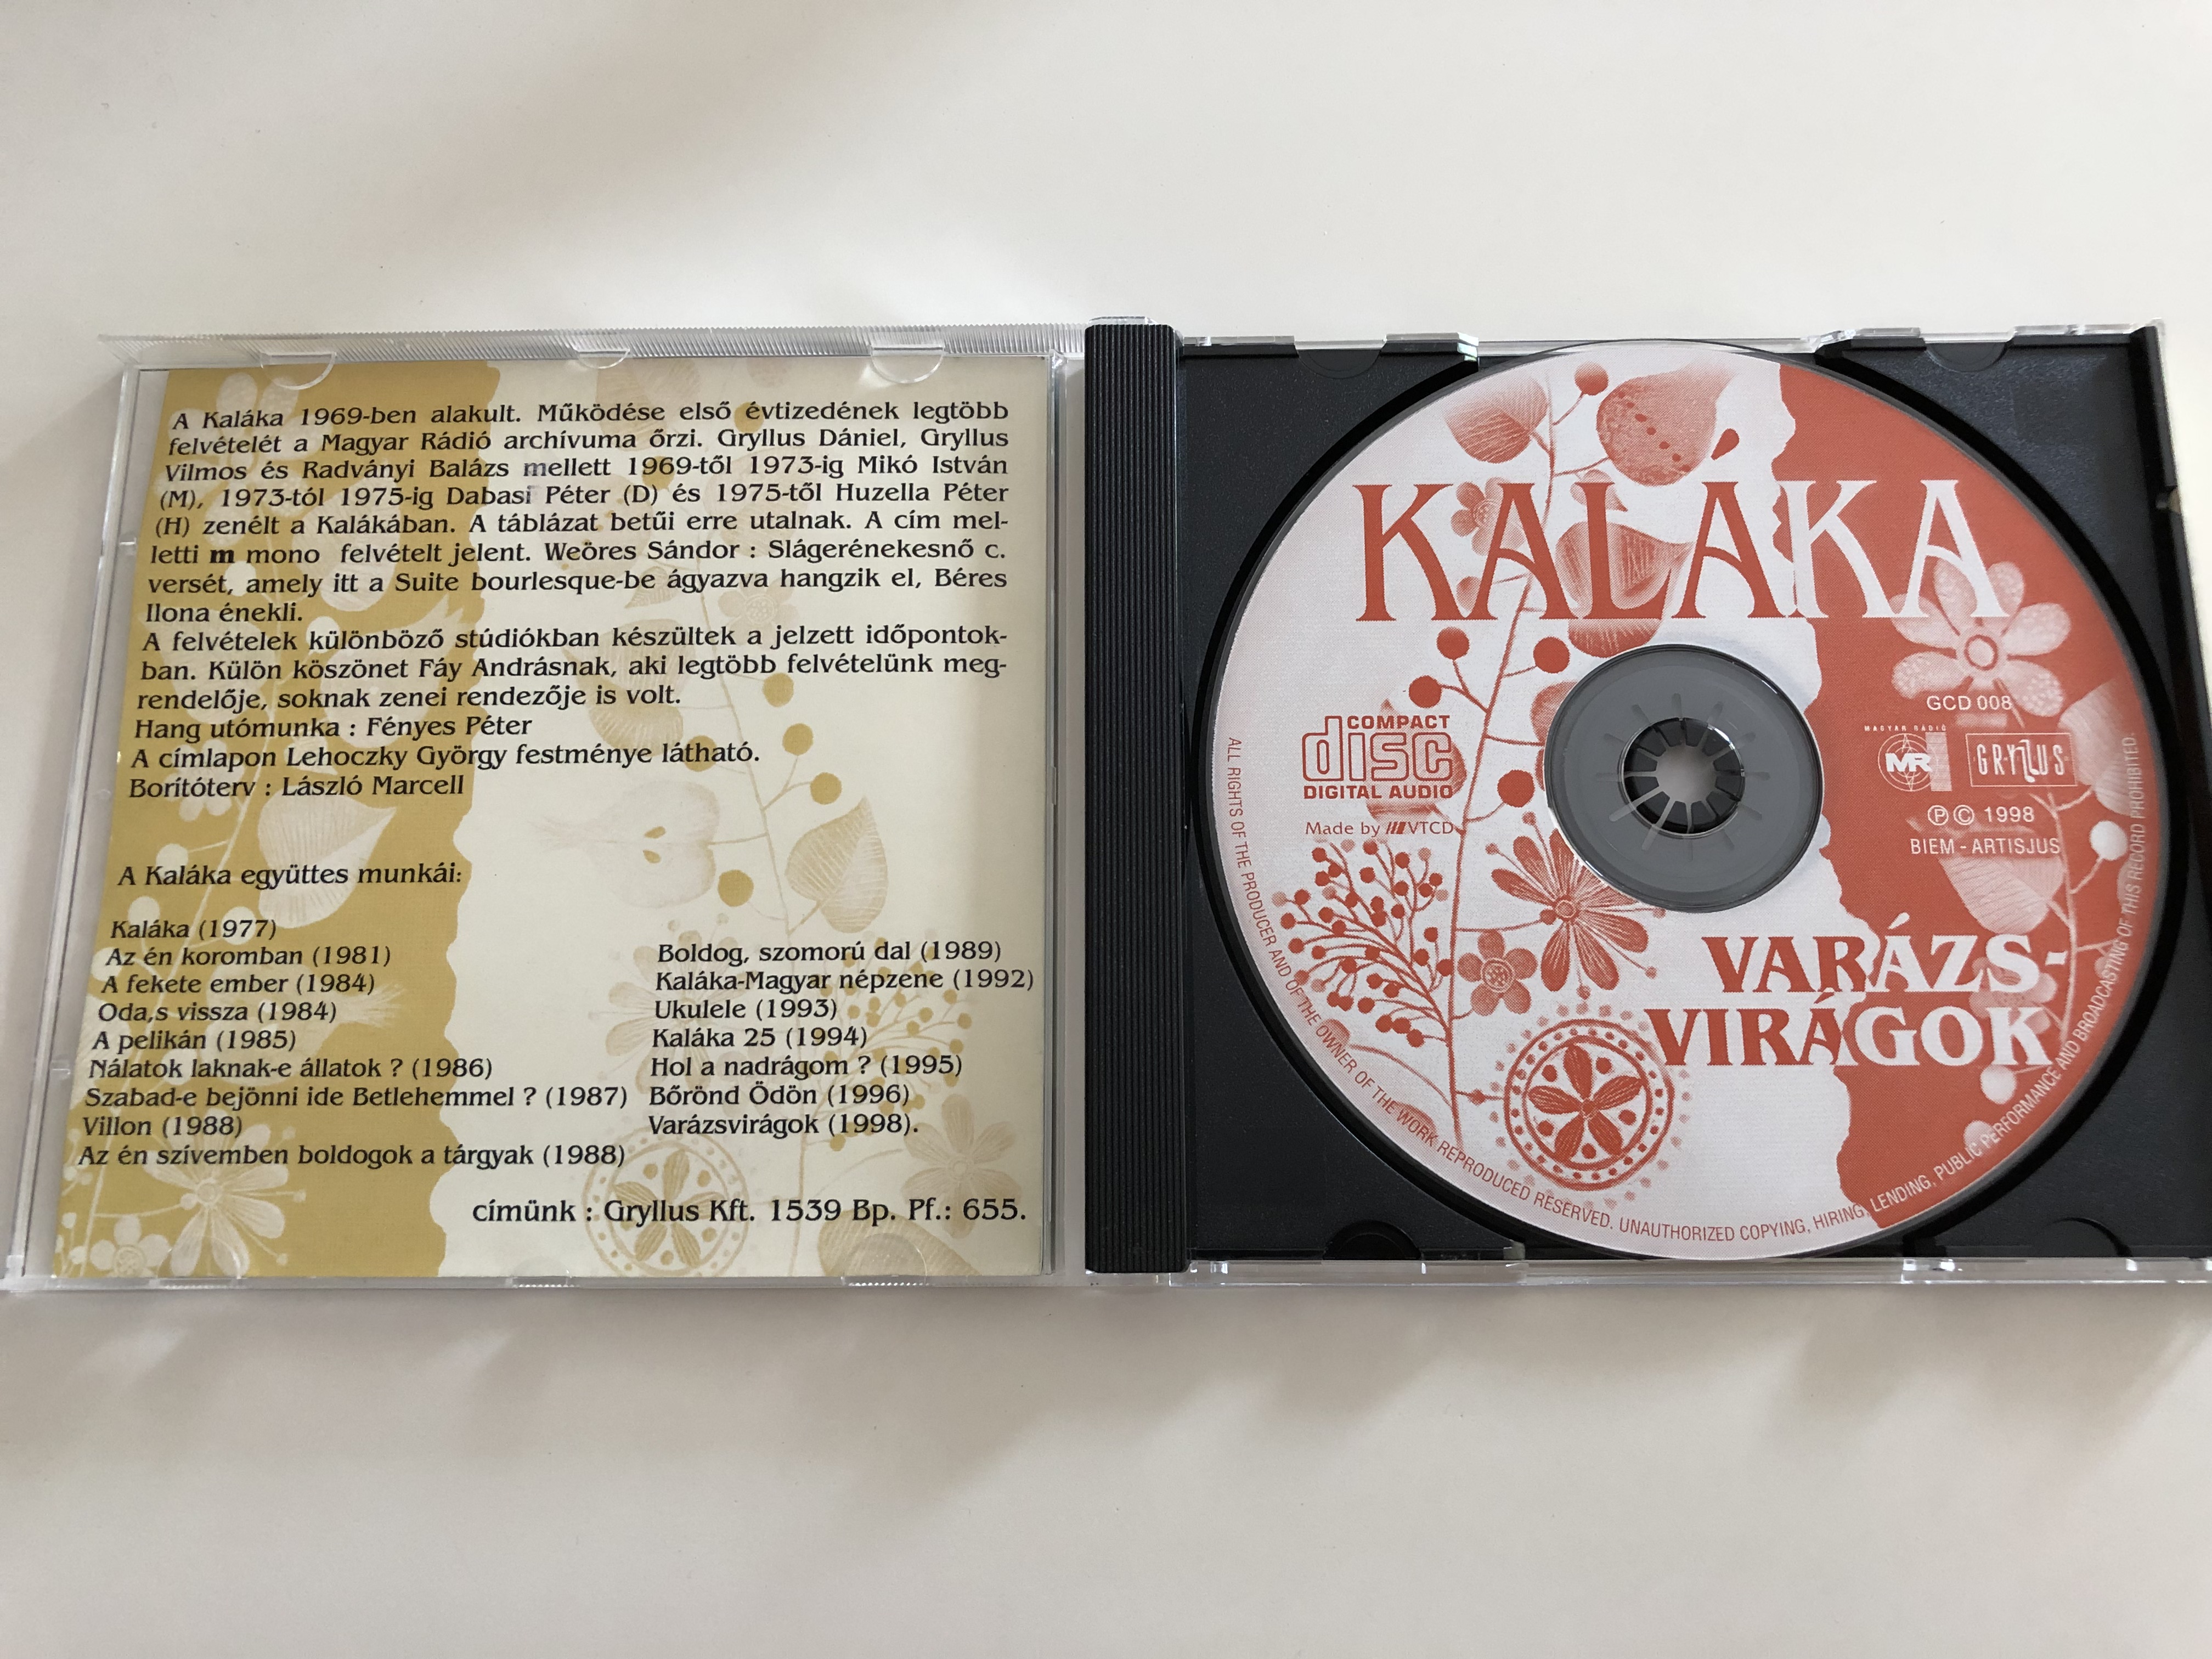 kal-ka-var-zsvir-gok-1971-s-1979-k-z-tt-k-sz-lt-felv-telek-gryllus-magyar-r-di-recordings-1971-1979-audio-cd-1998-gcd-008-3-.jpg